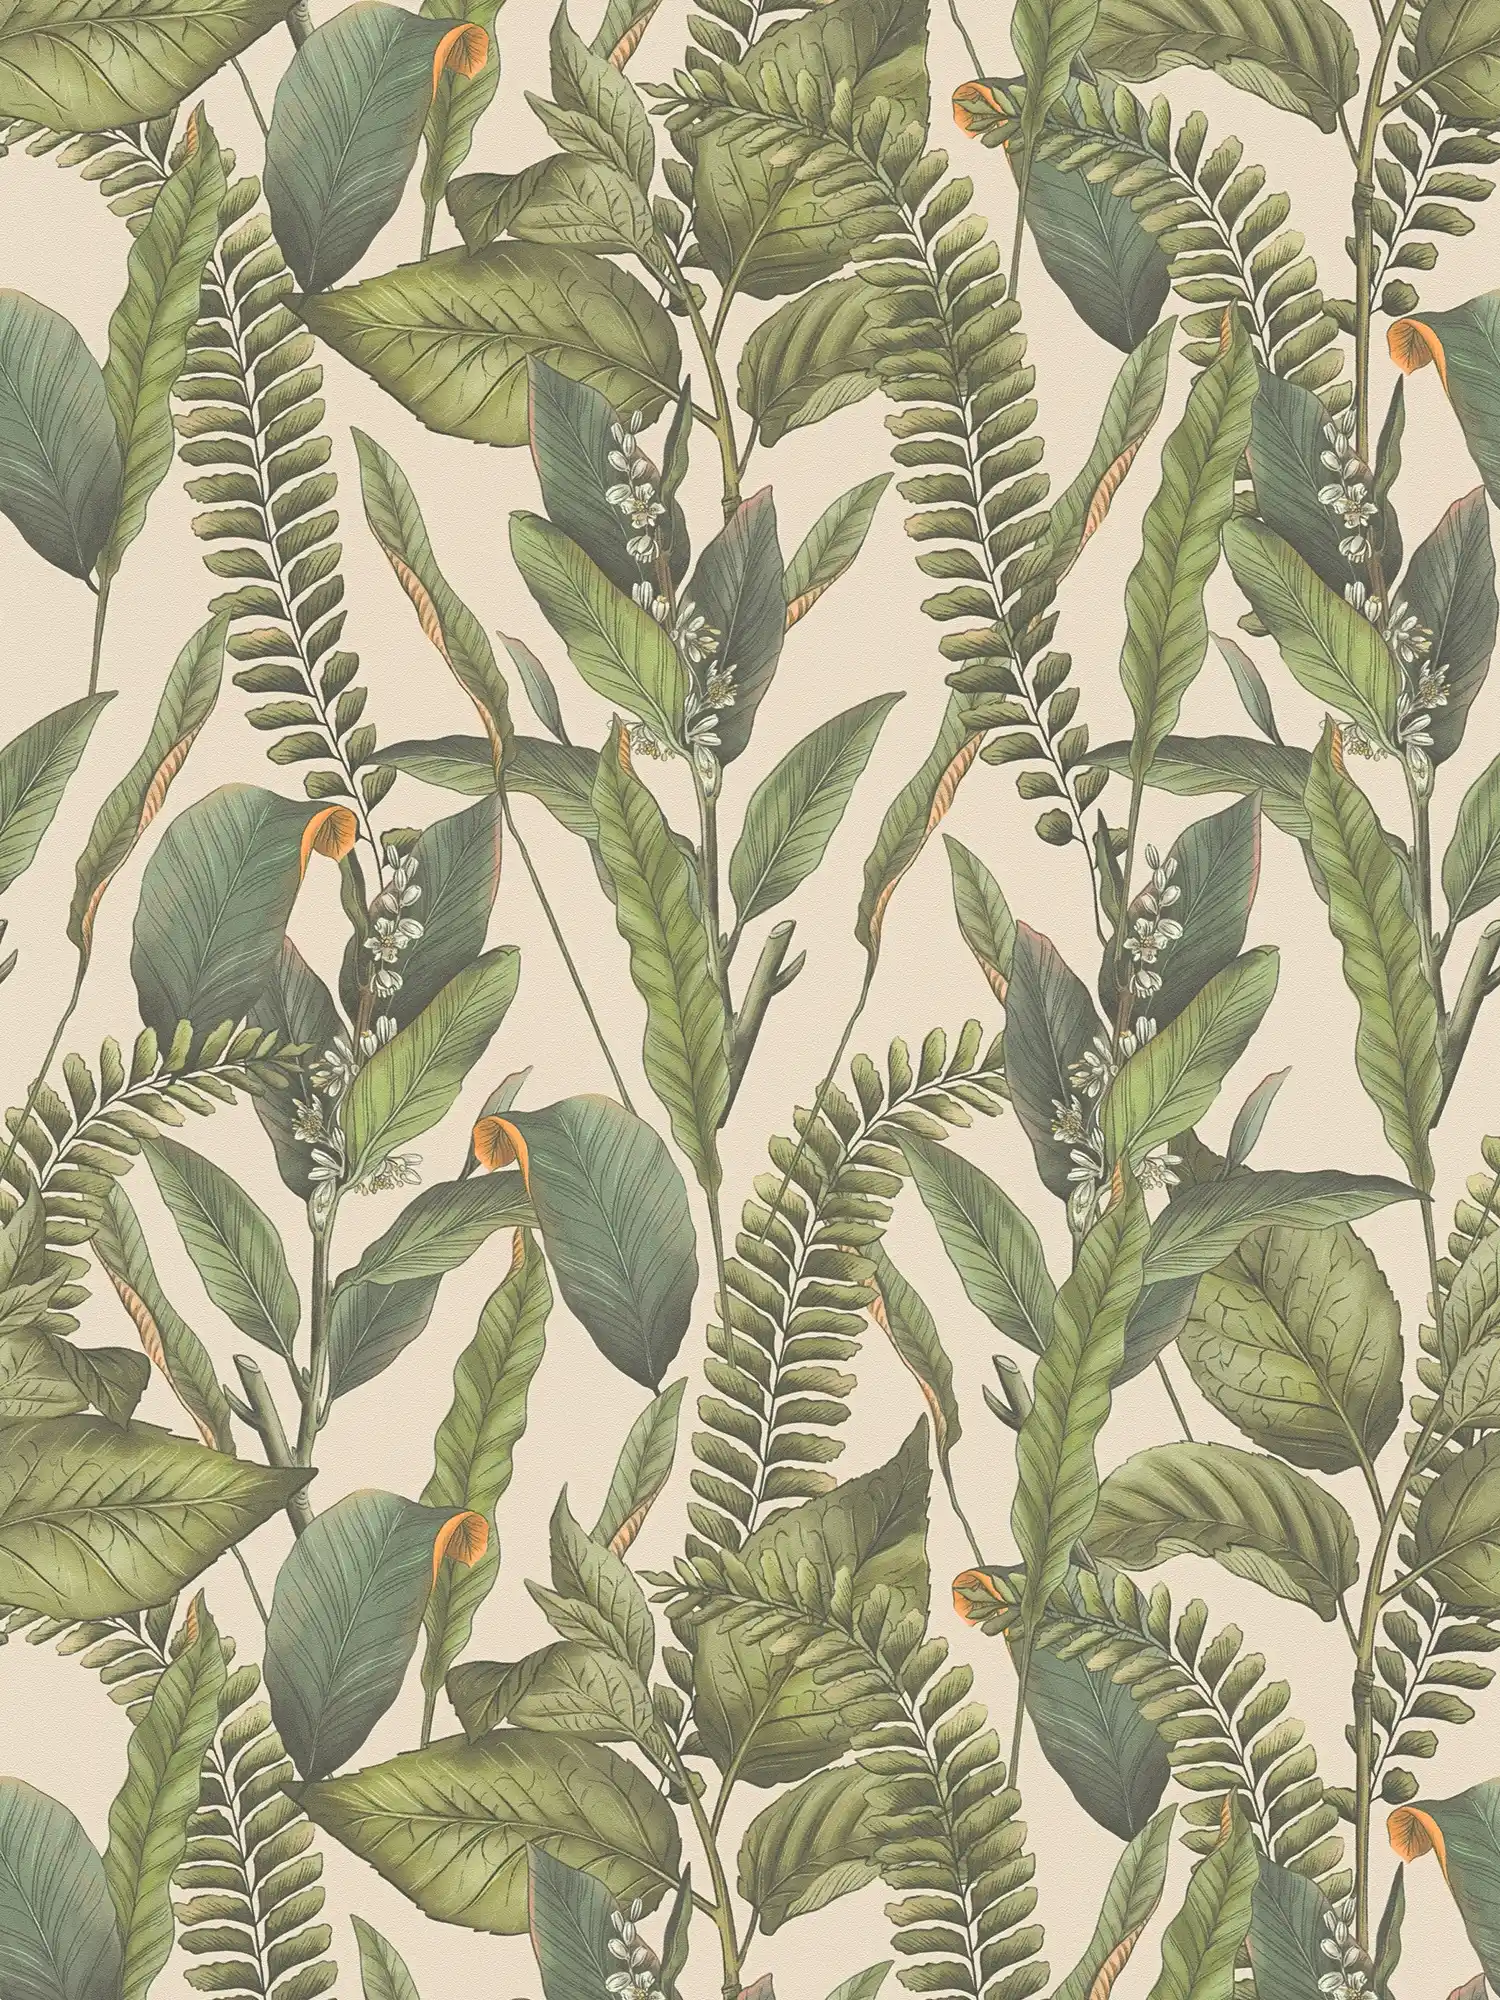 Floral jungle wallpaper with leaves & flowers textured matt - cream, green, orange
